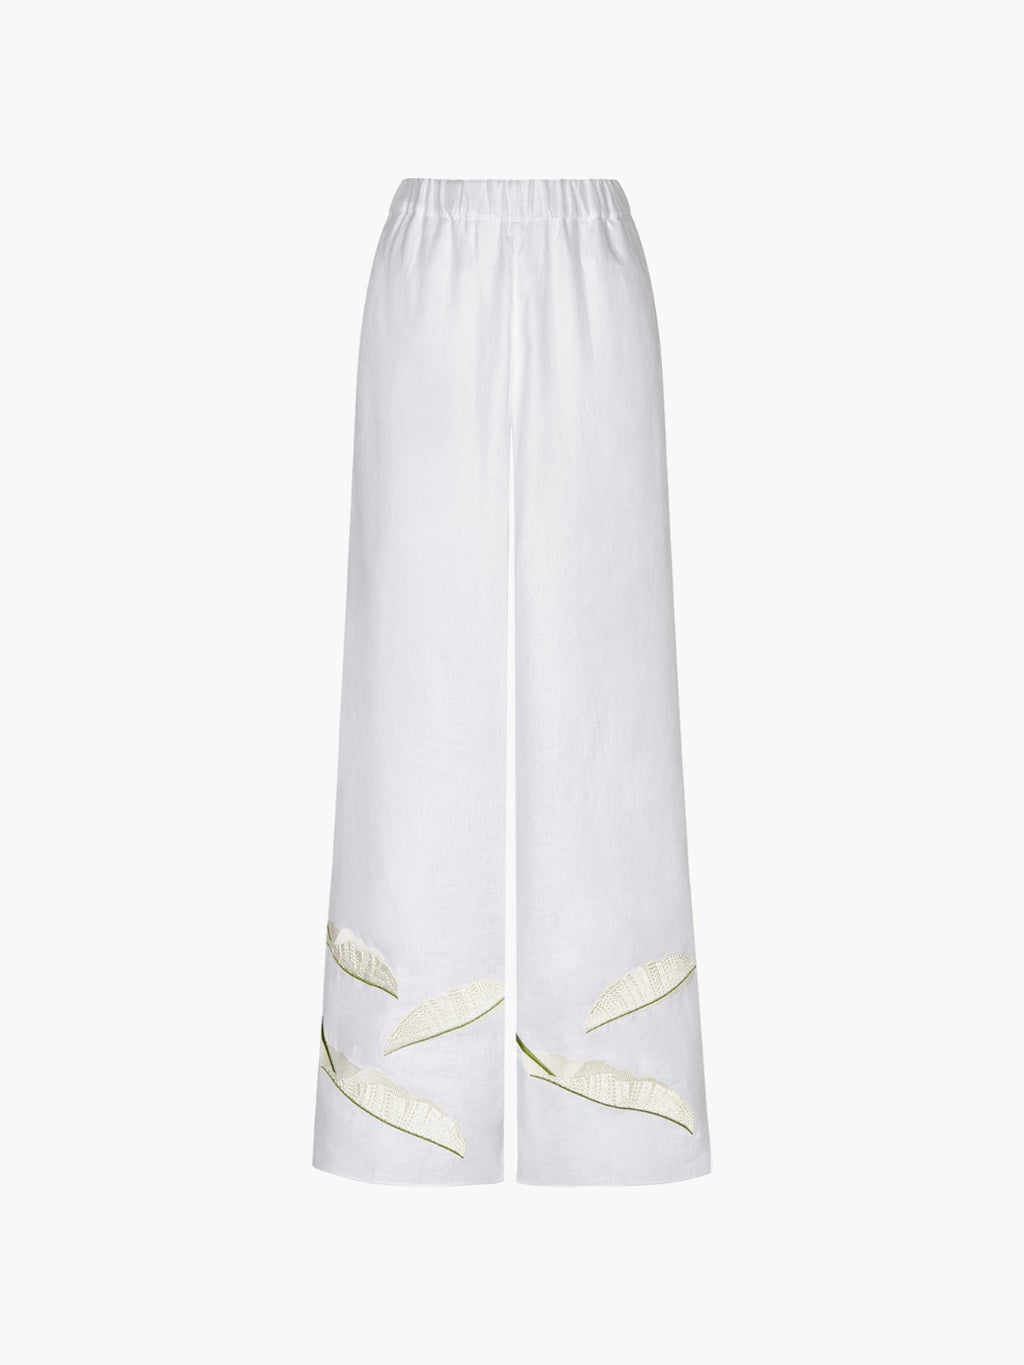 San Benito Embroidered Linen Pants | White